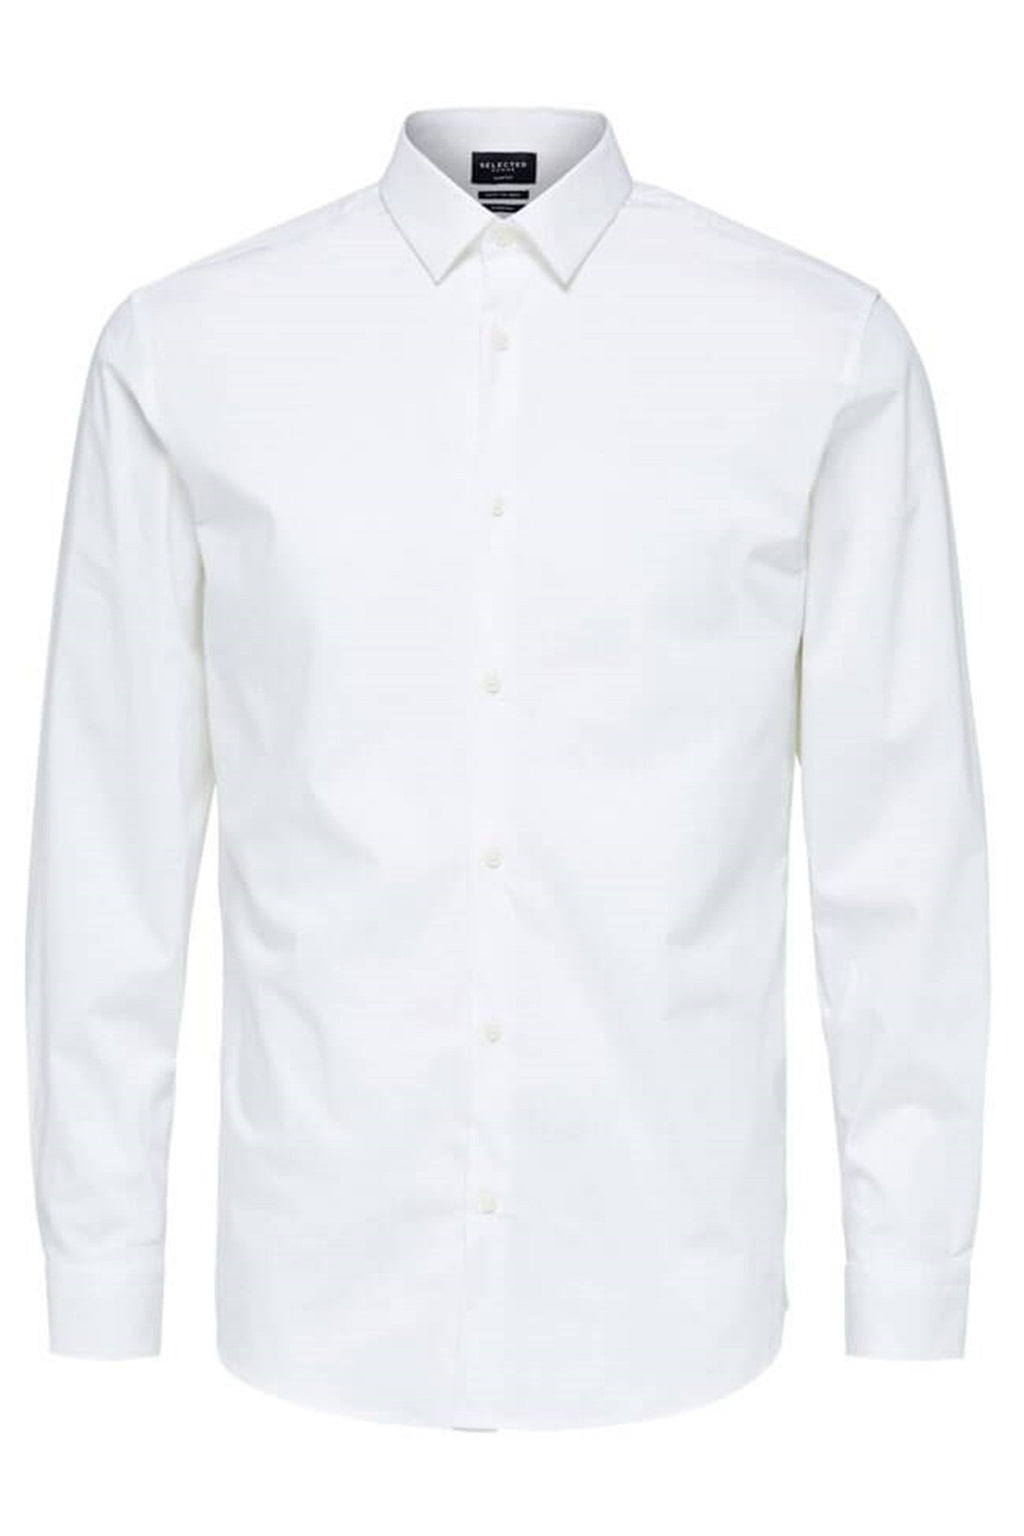 Preston skjorte - Slim fit - Hvid